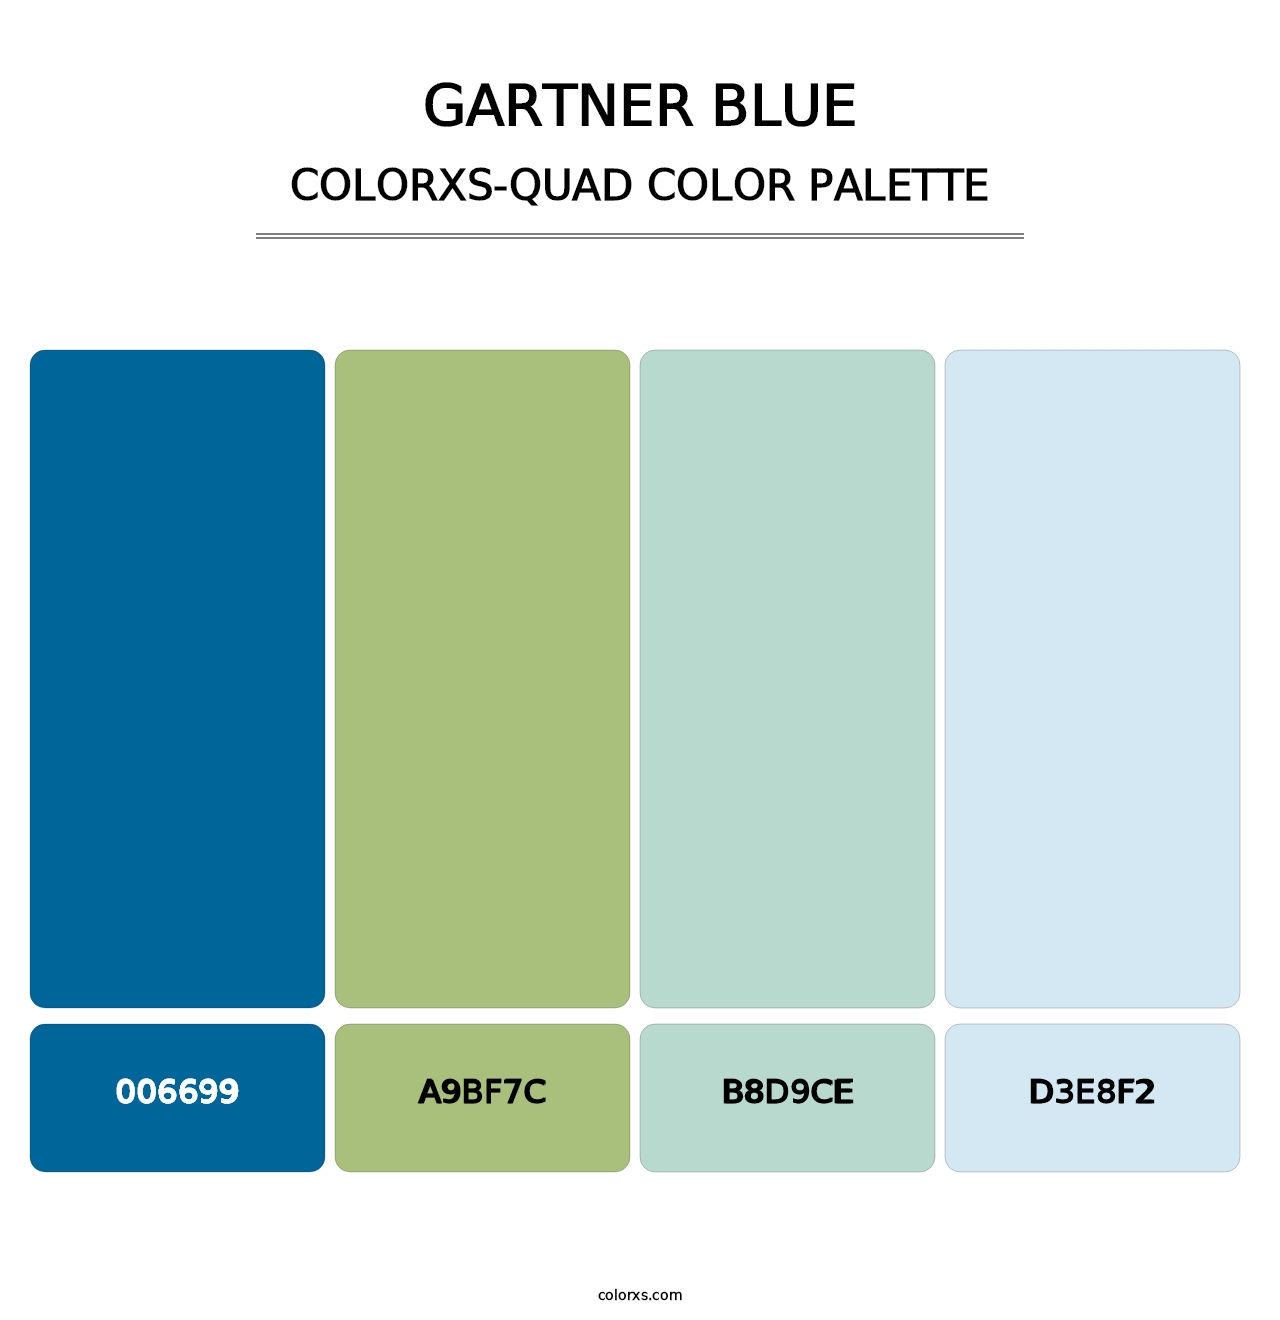 Gartner Blue - Colorxs Quad Palette